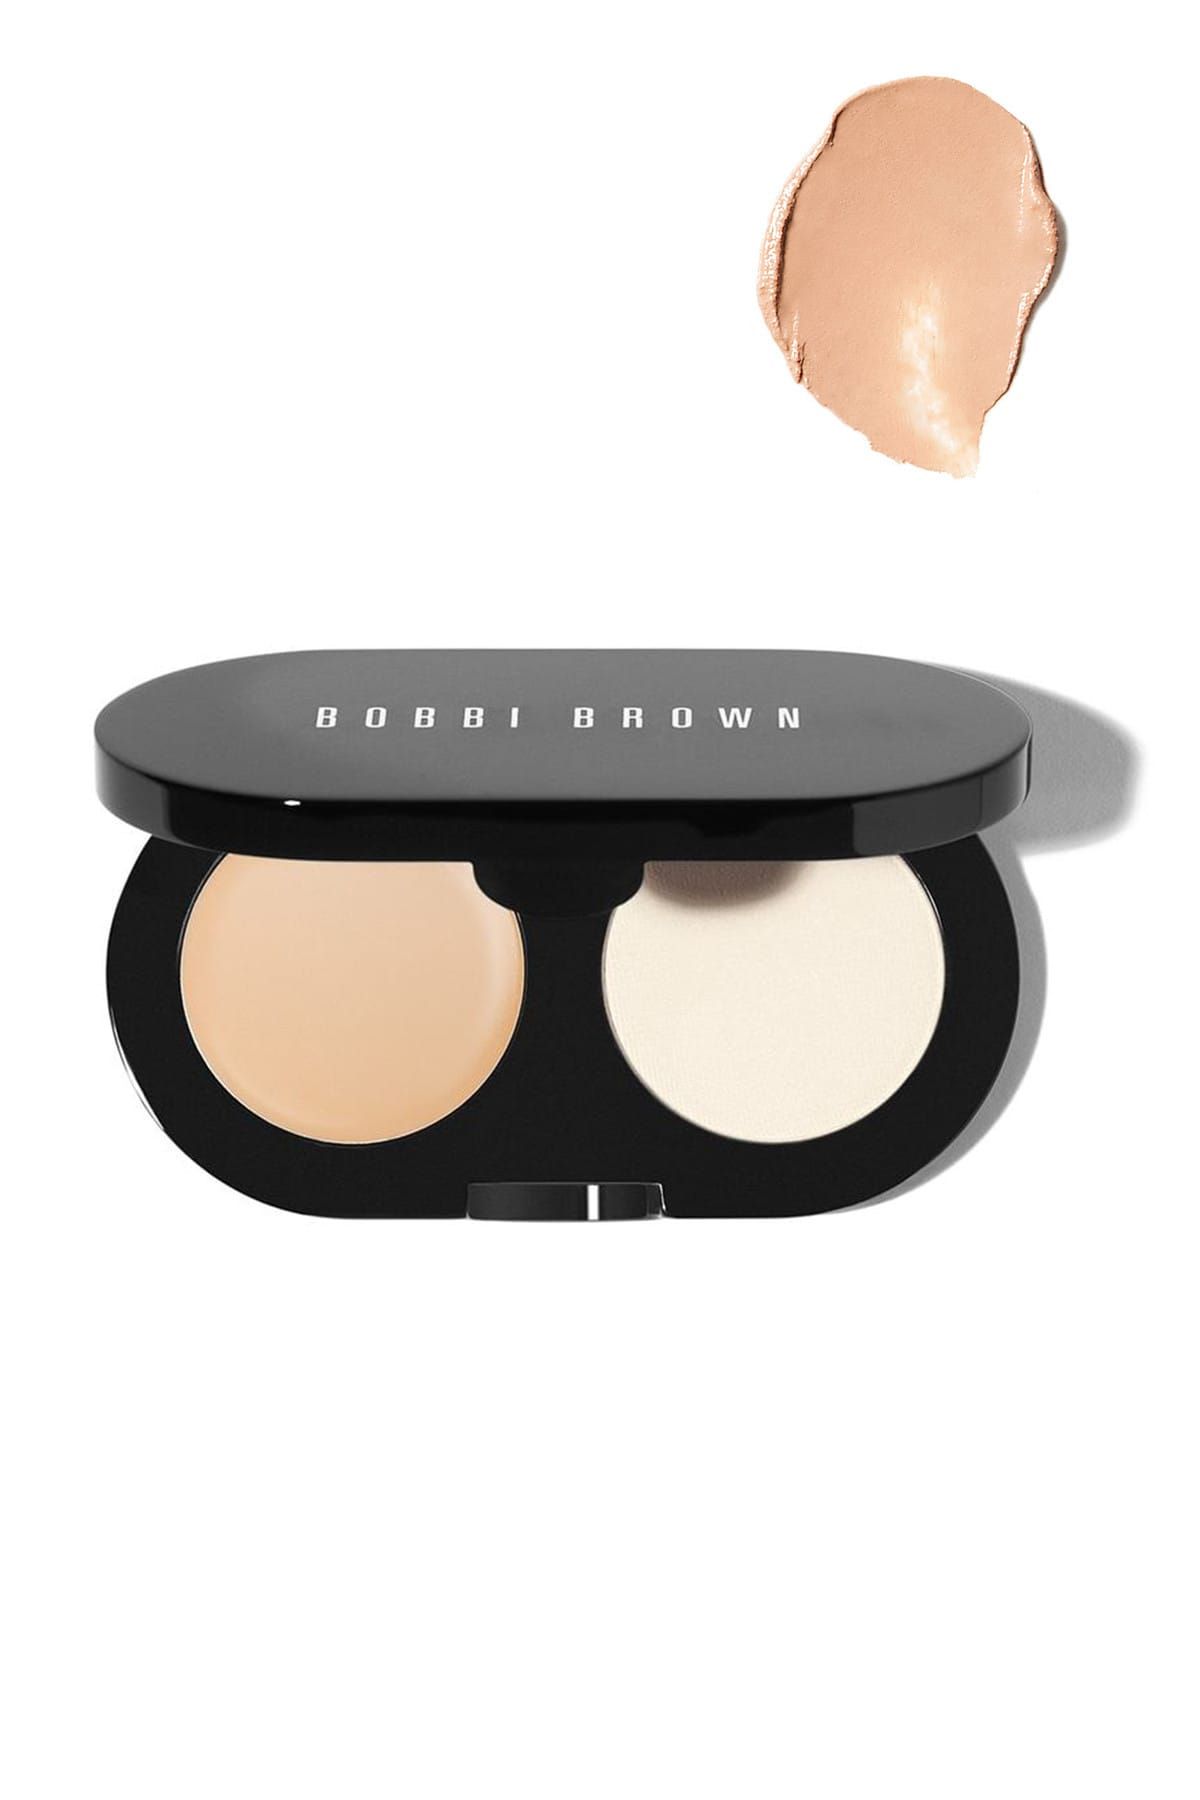 Bobbi Brown Kapatıcı Kiti - Creamy Concelaer Cool Sand 1.7 g 716170086545